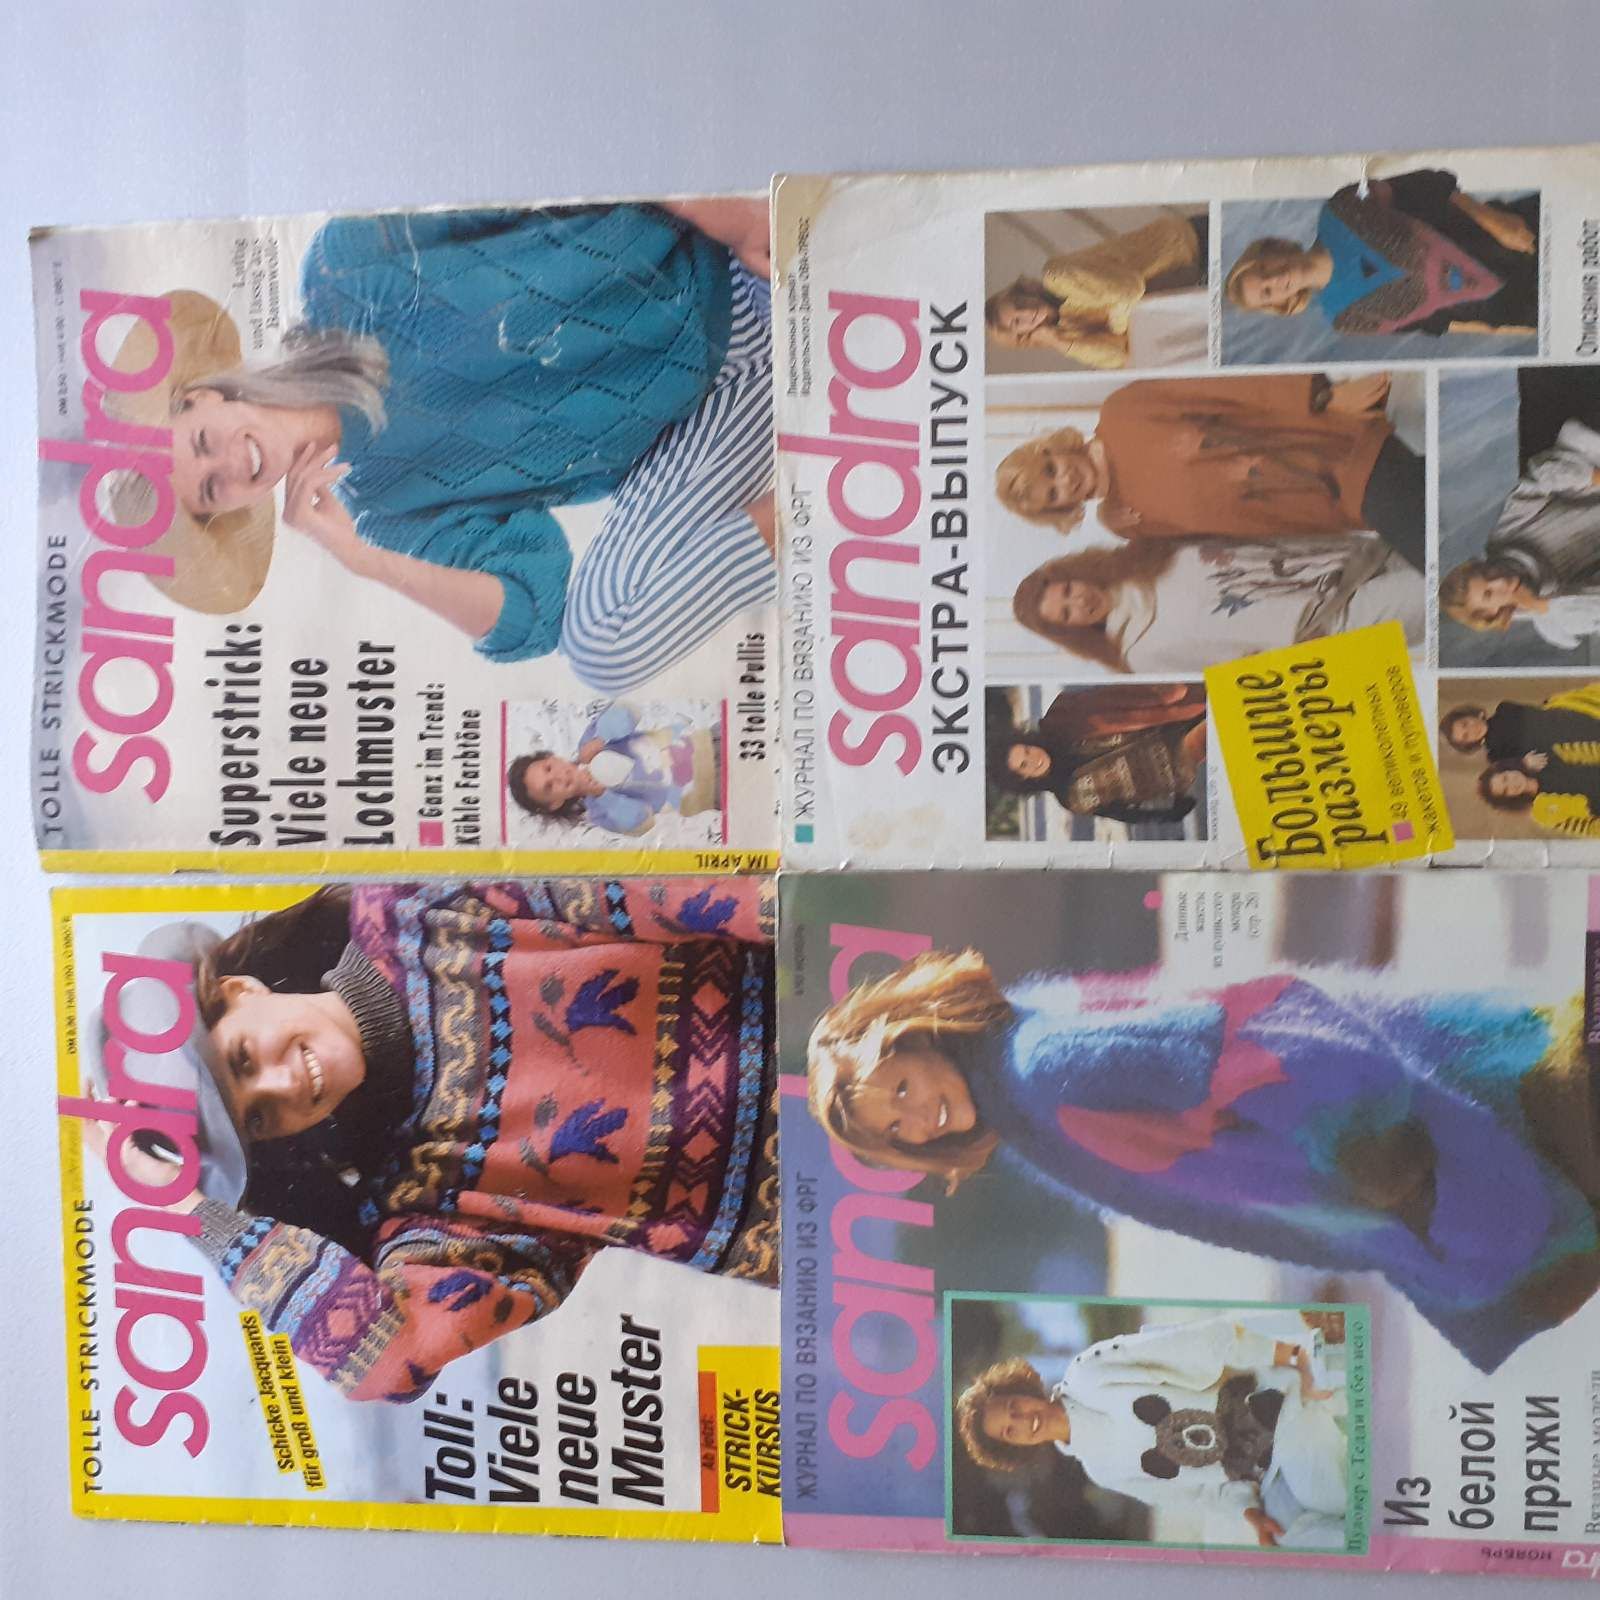 Журнал "sanbra" 90-х годов